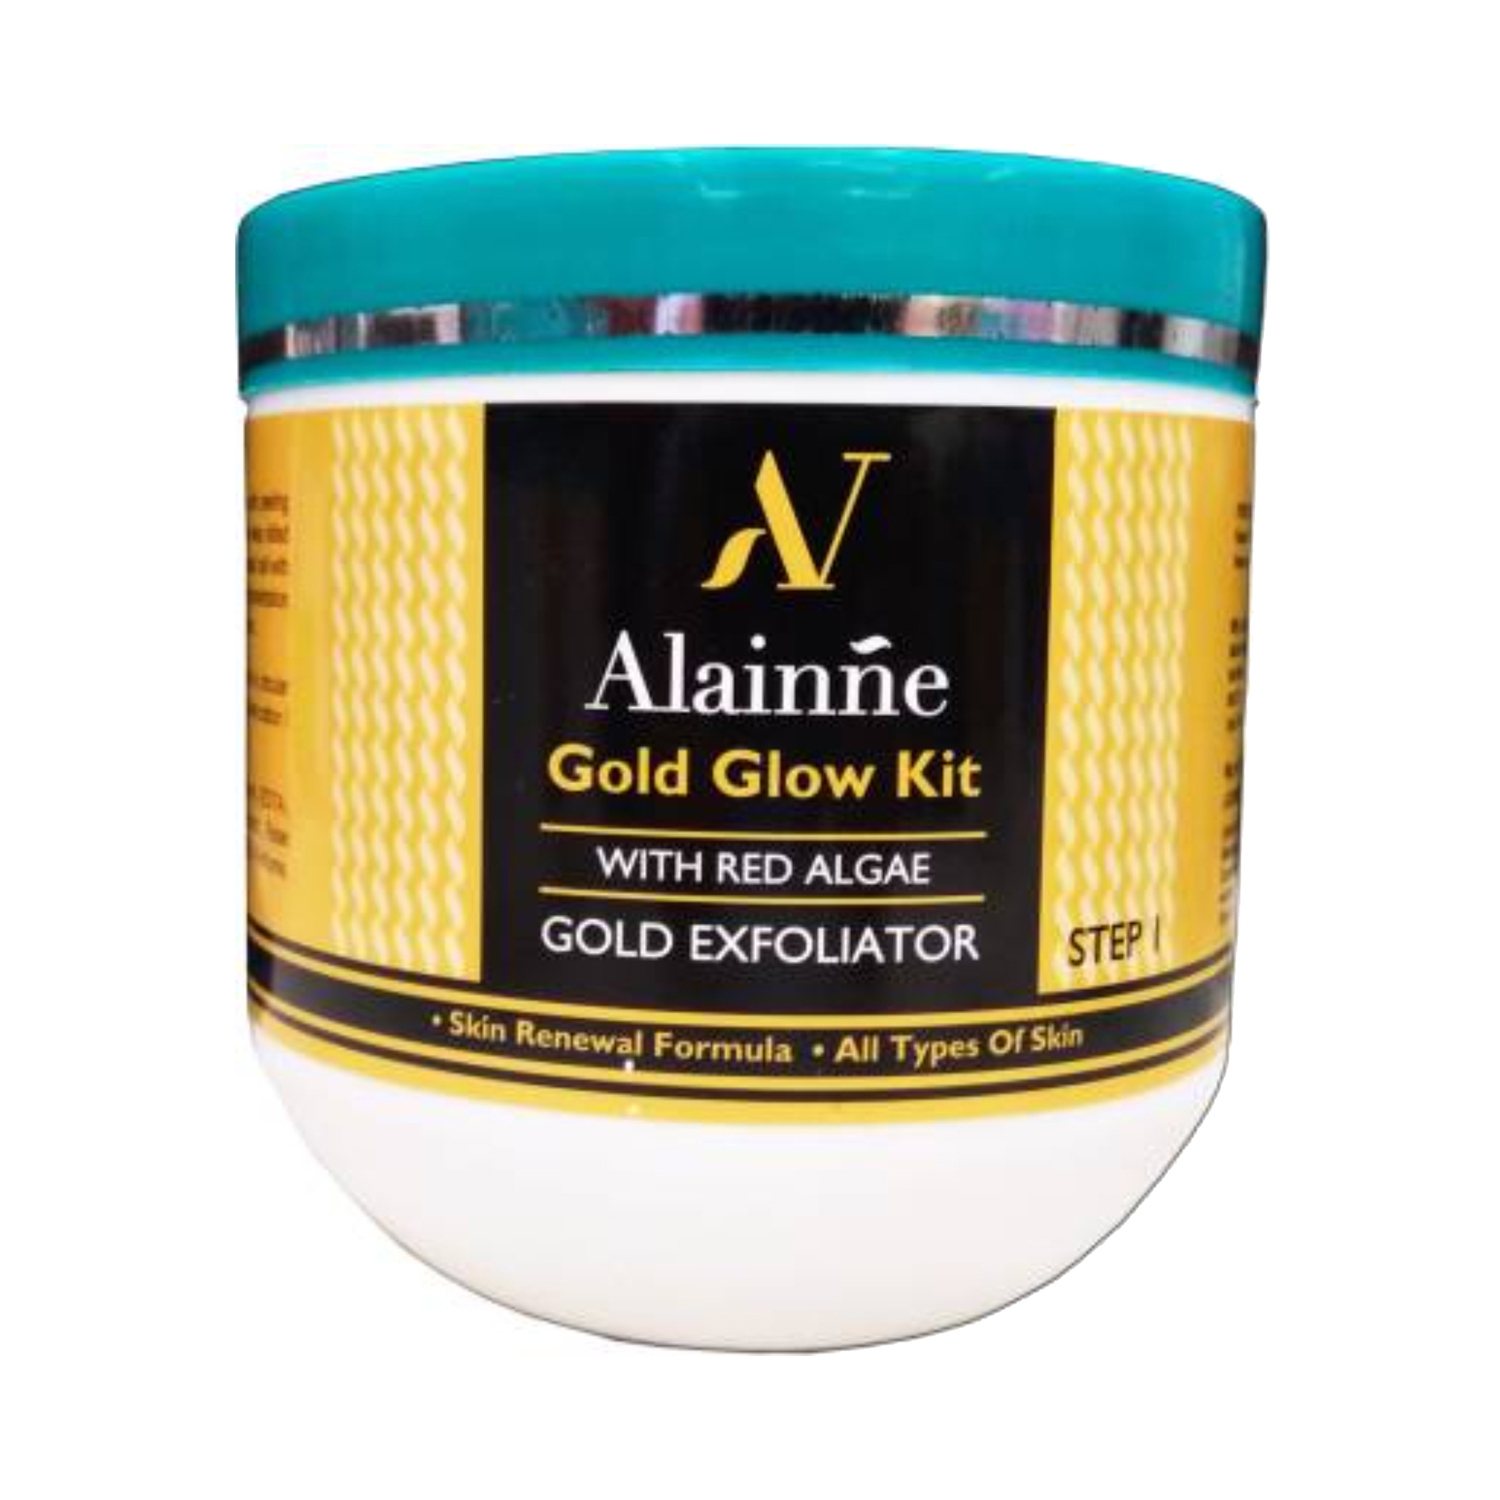 Alainne | Alainne Gold Glow Kit With Red Algae Step-1 Gold Exfoliator - (500g)